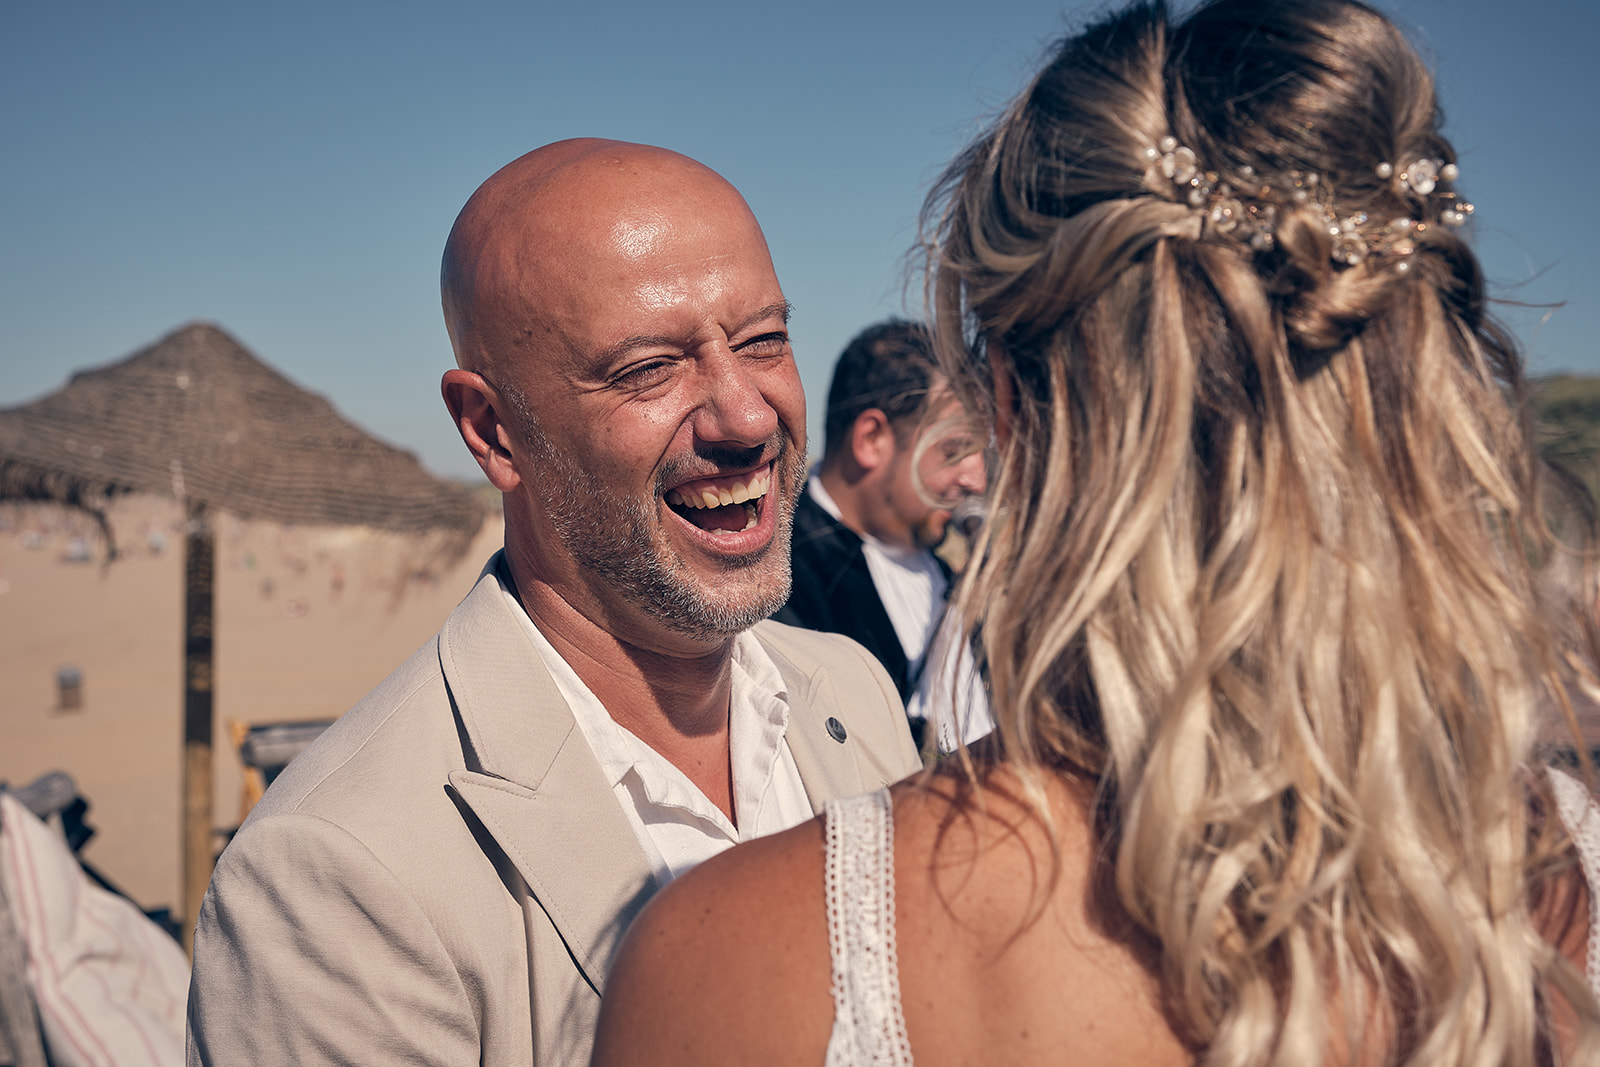 trouwfotograaf Scheveningen, bruidsfotografie zonsondergang, strandclub Naturel, Pascal en Jolanda-ceremonie